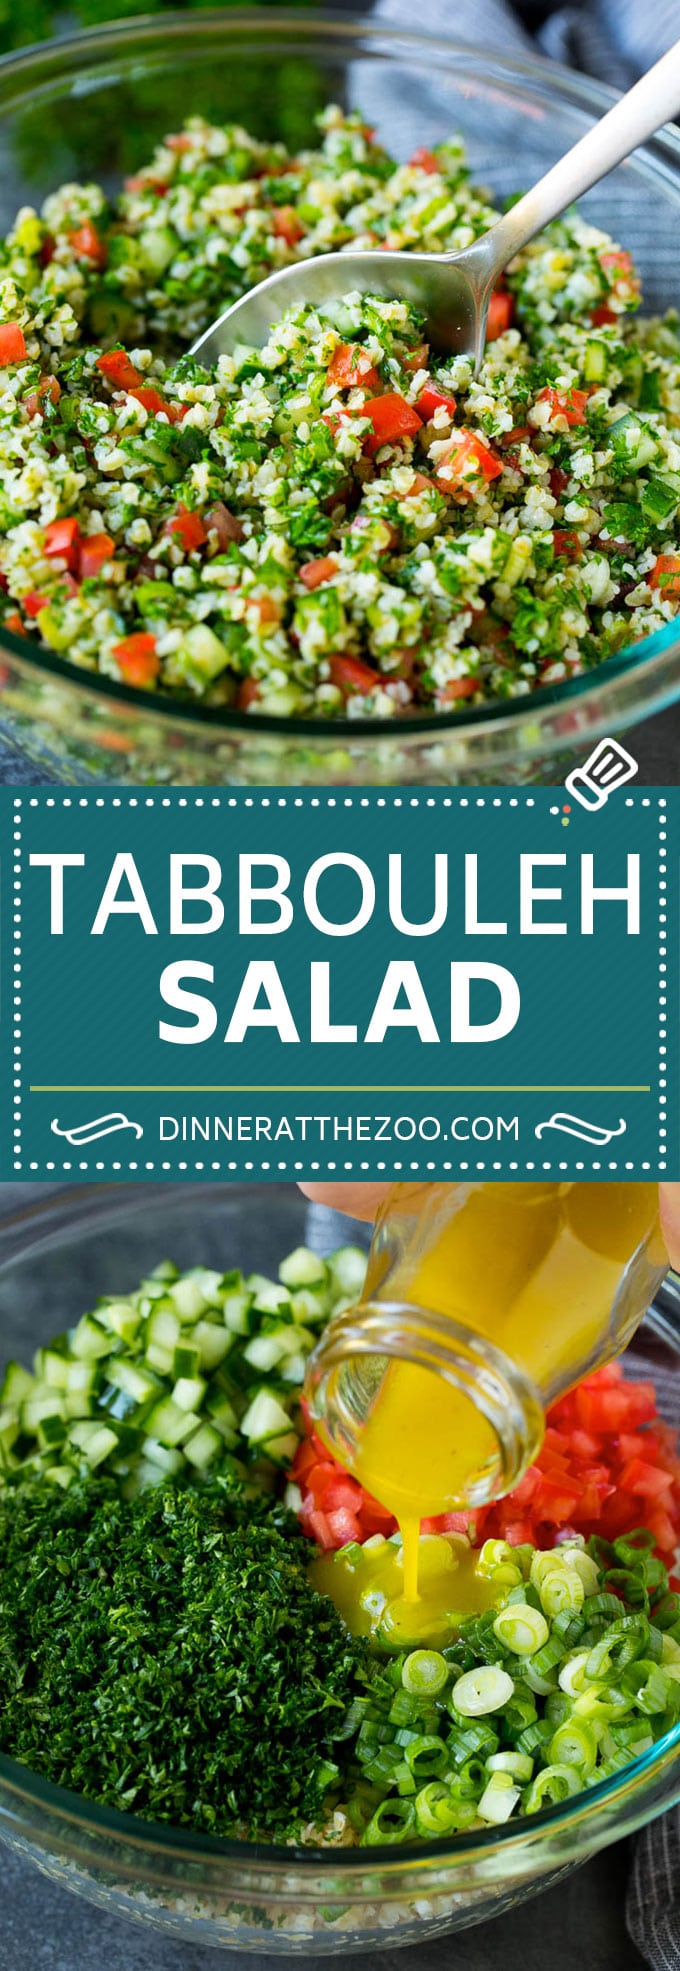 Tabbouleh Salad | Tabouli #salad #wheat #tomatoes #cucumber #healthy #sidedish #dinner #dinneratthezoo